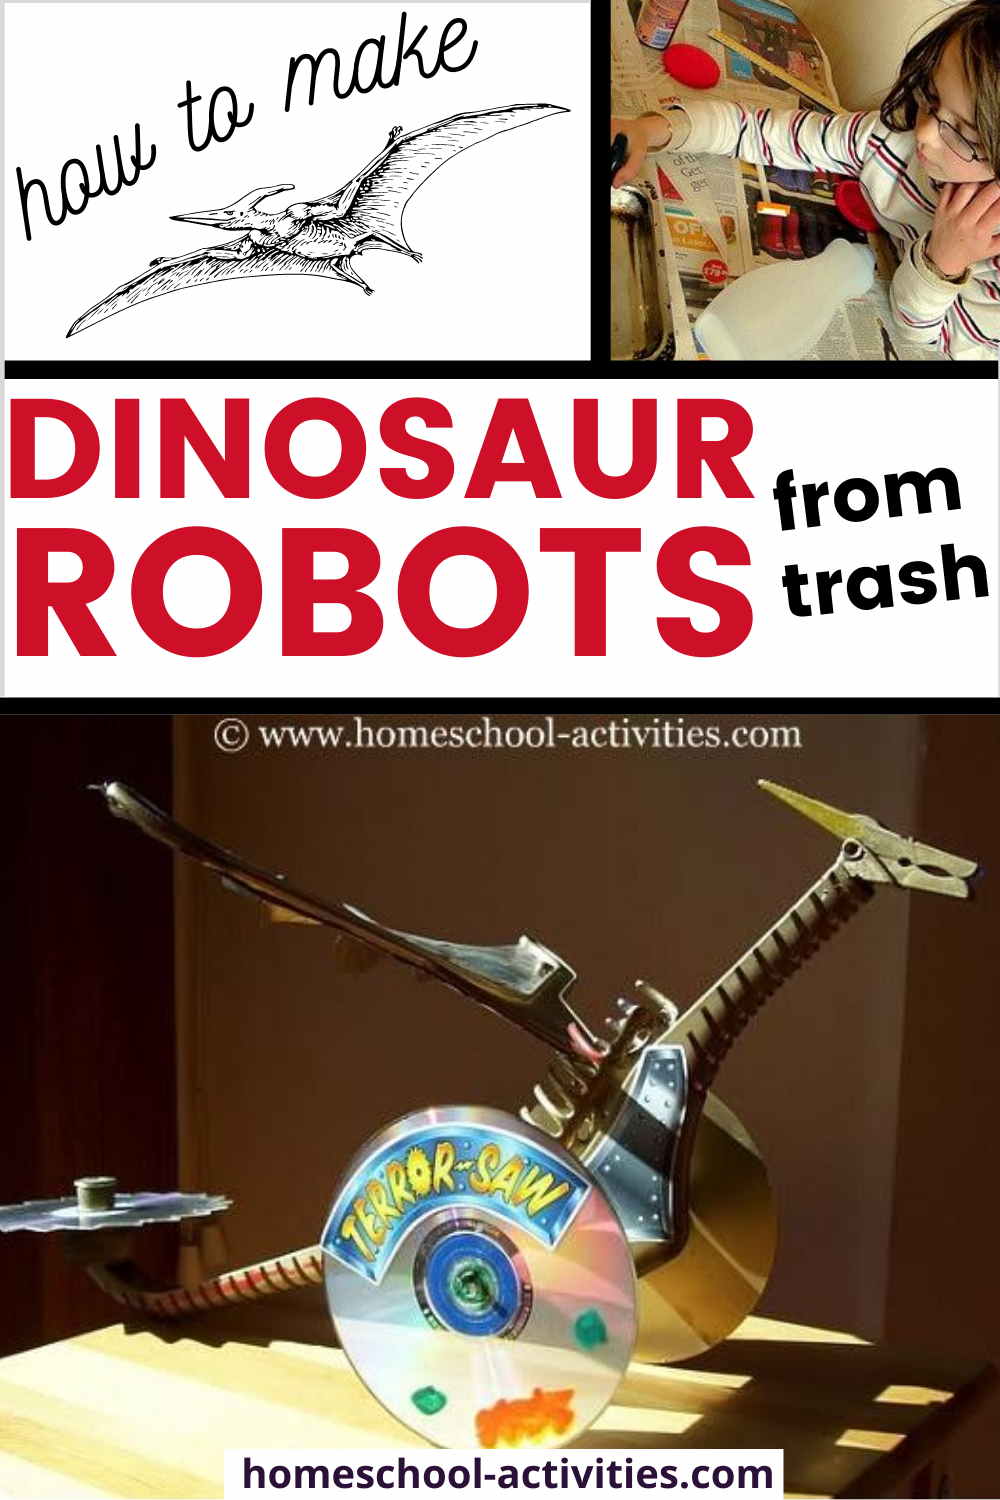 Build a dinosaur robot